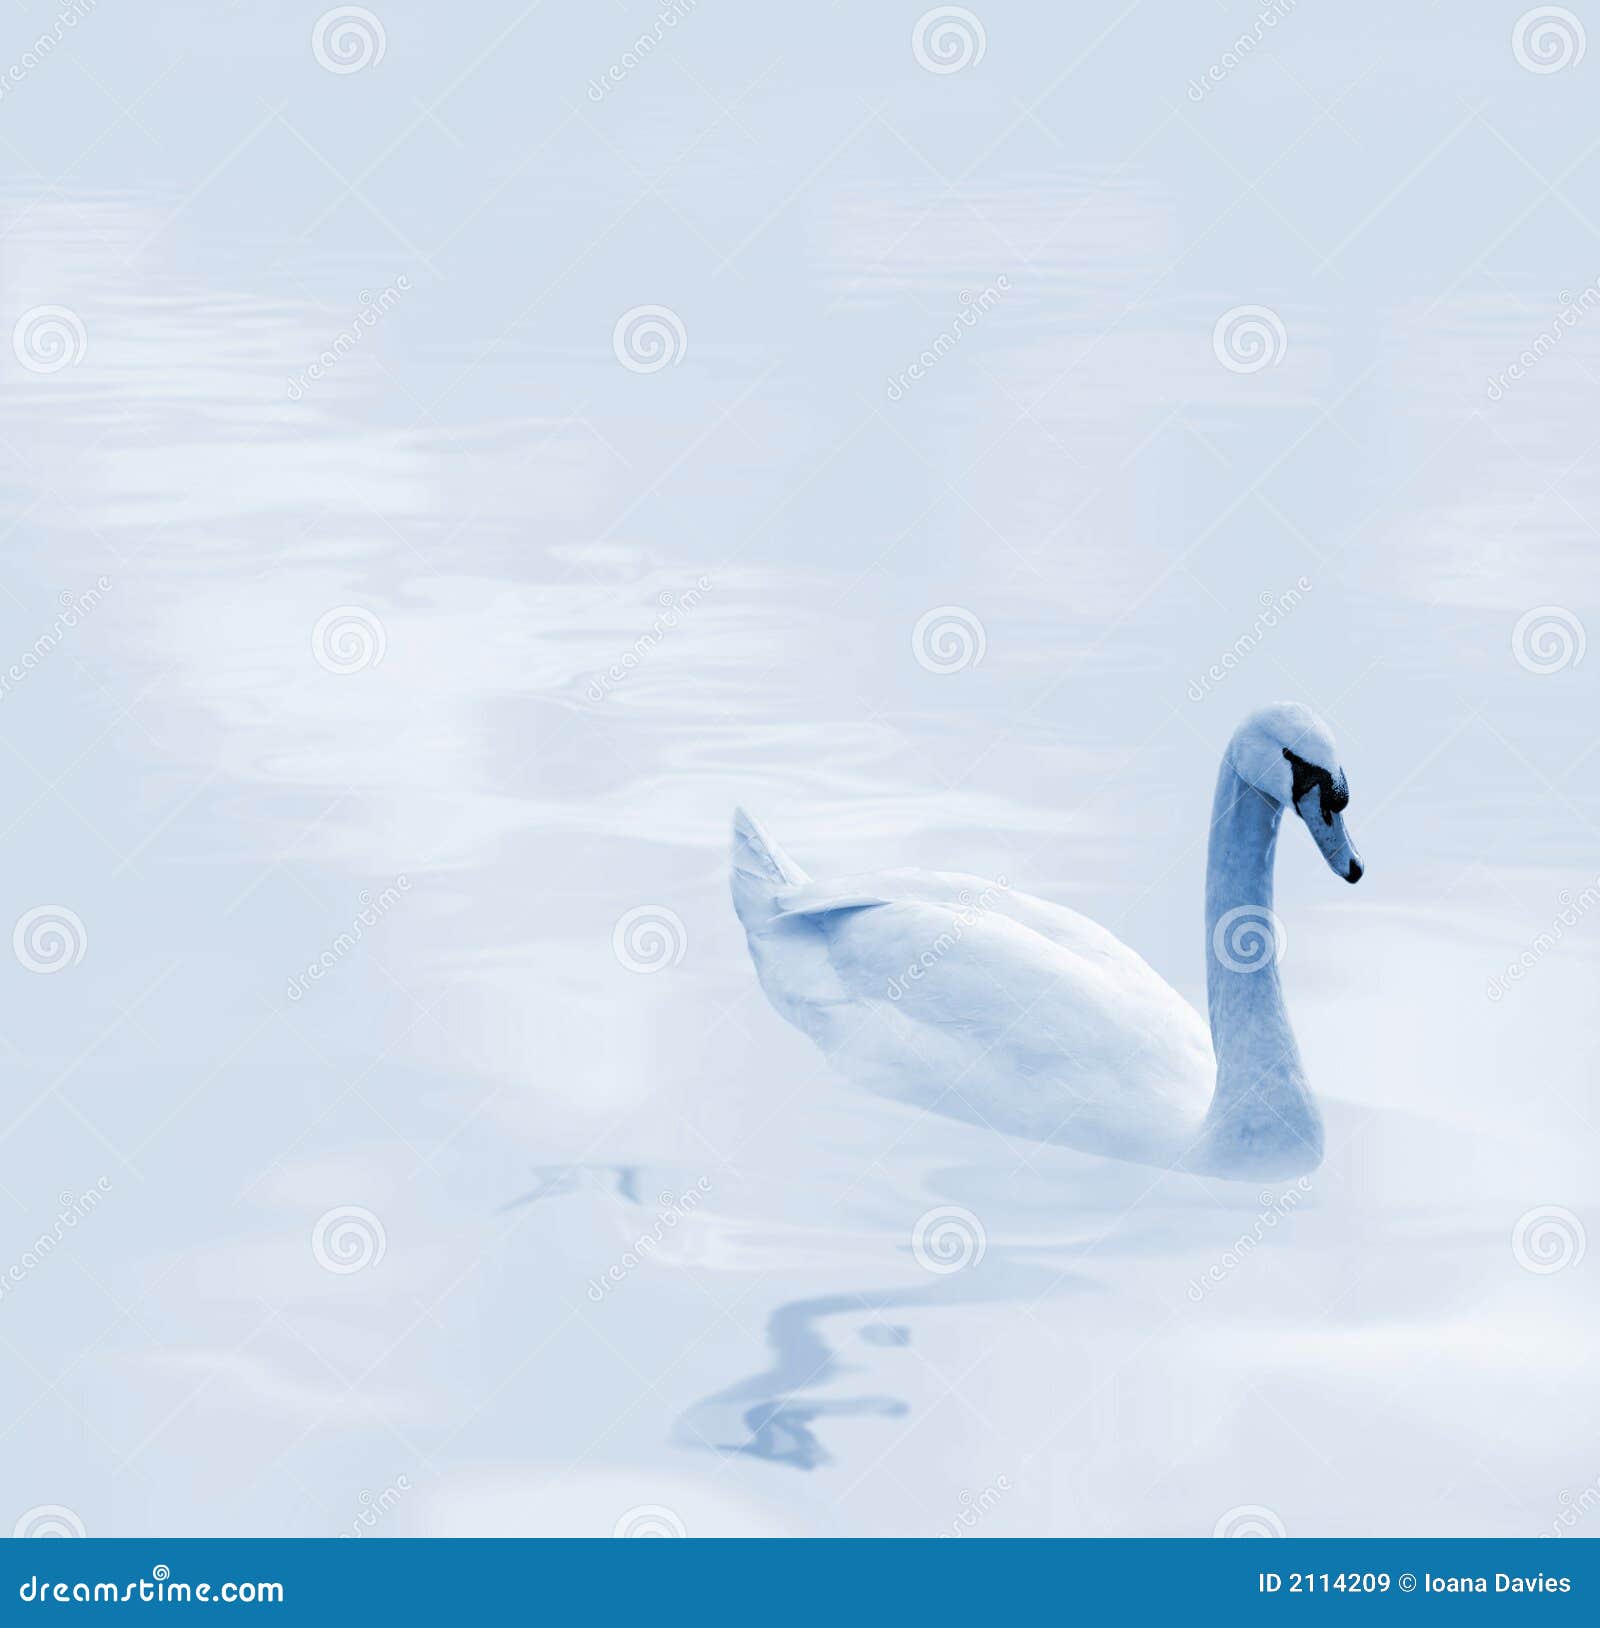 beautiful gliding swan